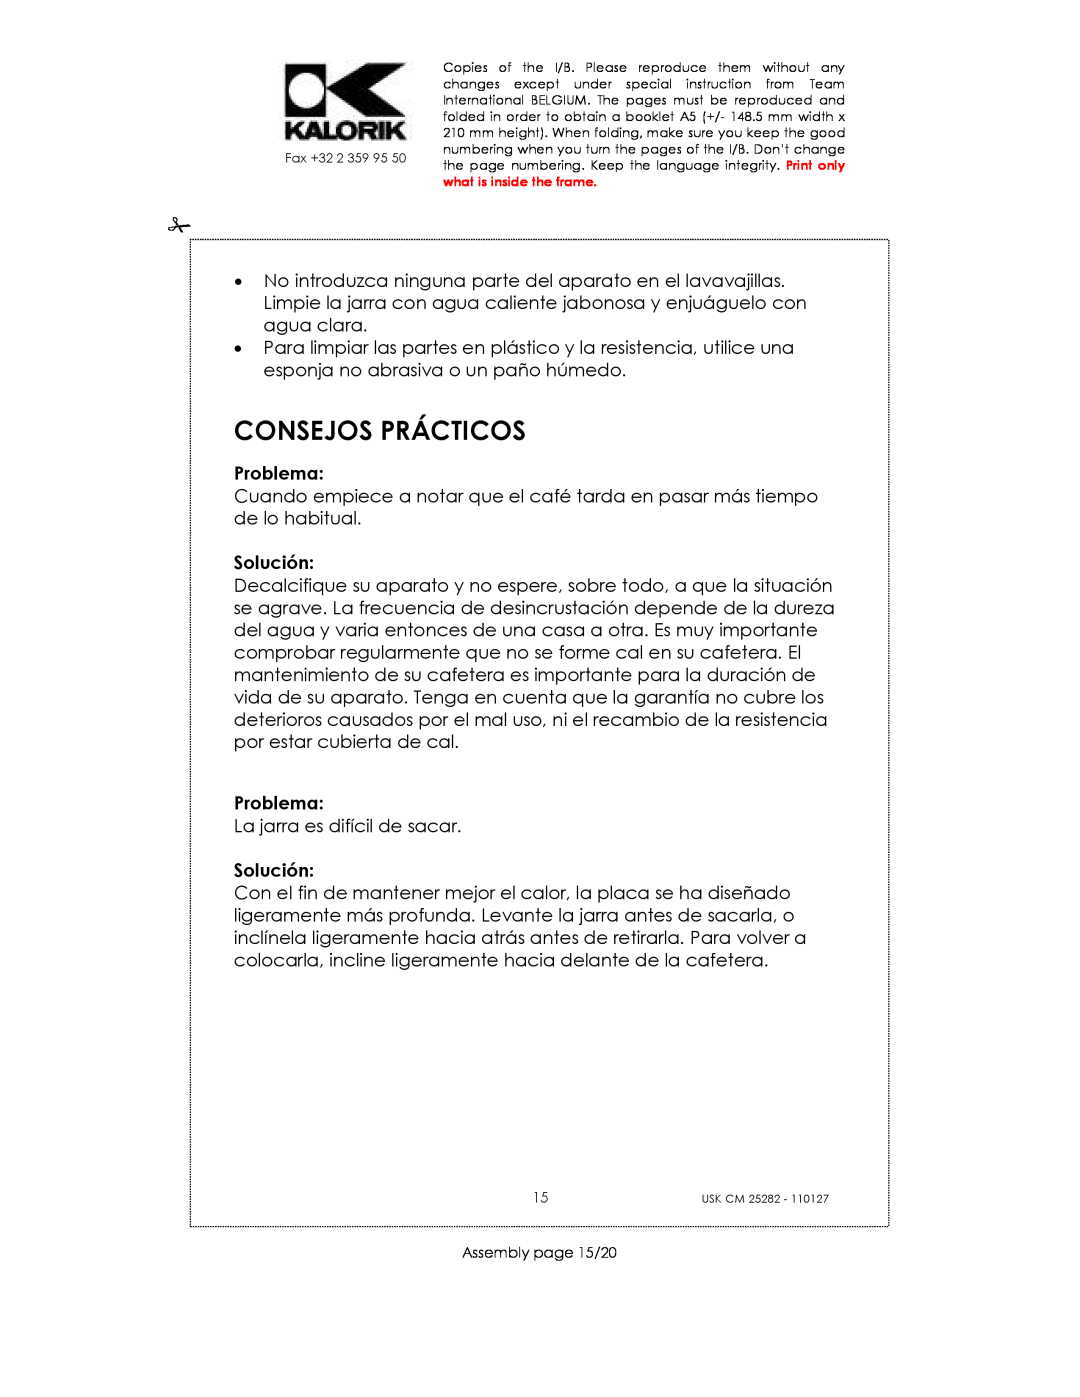 Kalorik USK CM 25282 manual Consejos Prácticos, Problema, Solución 